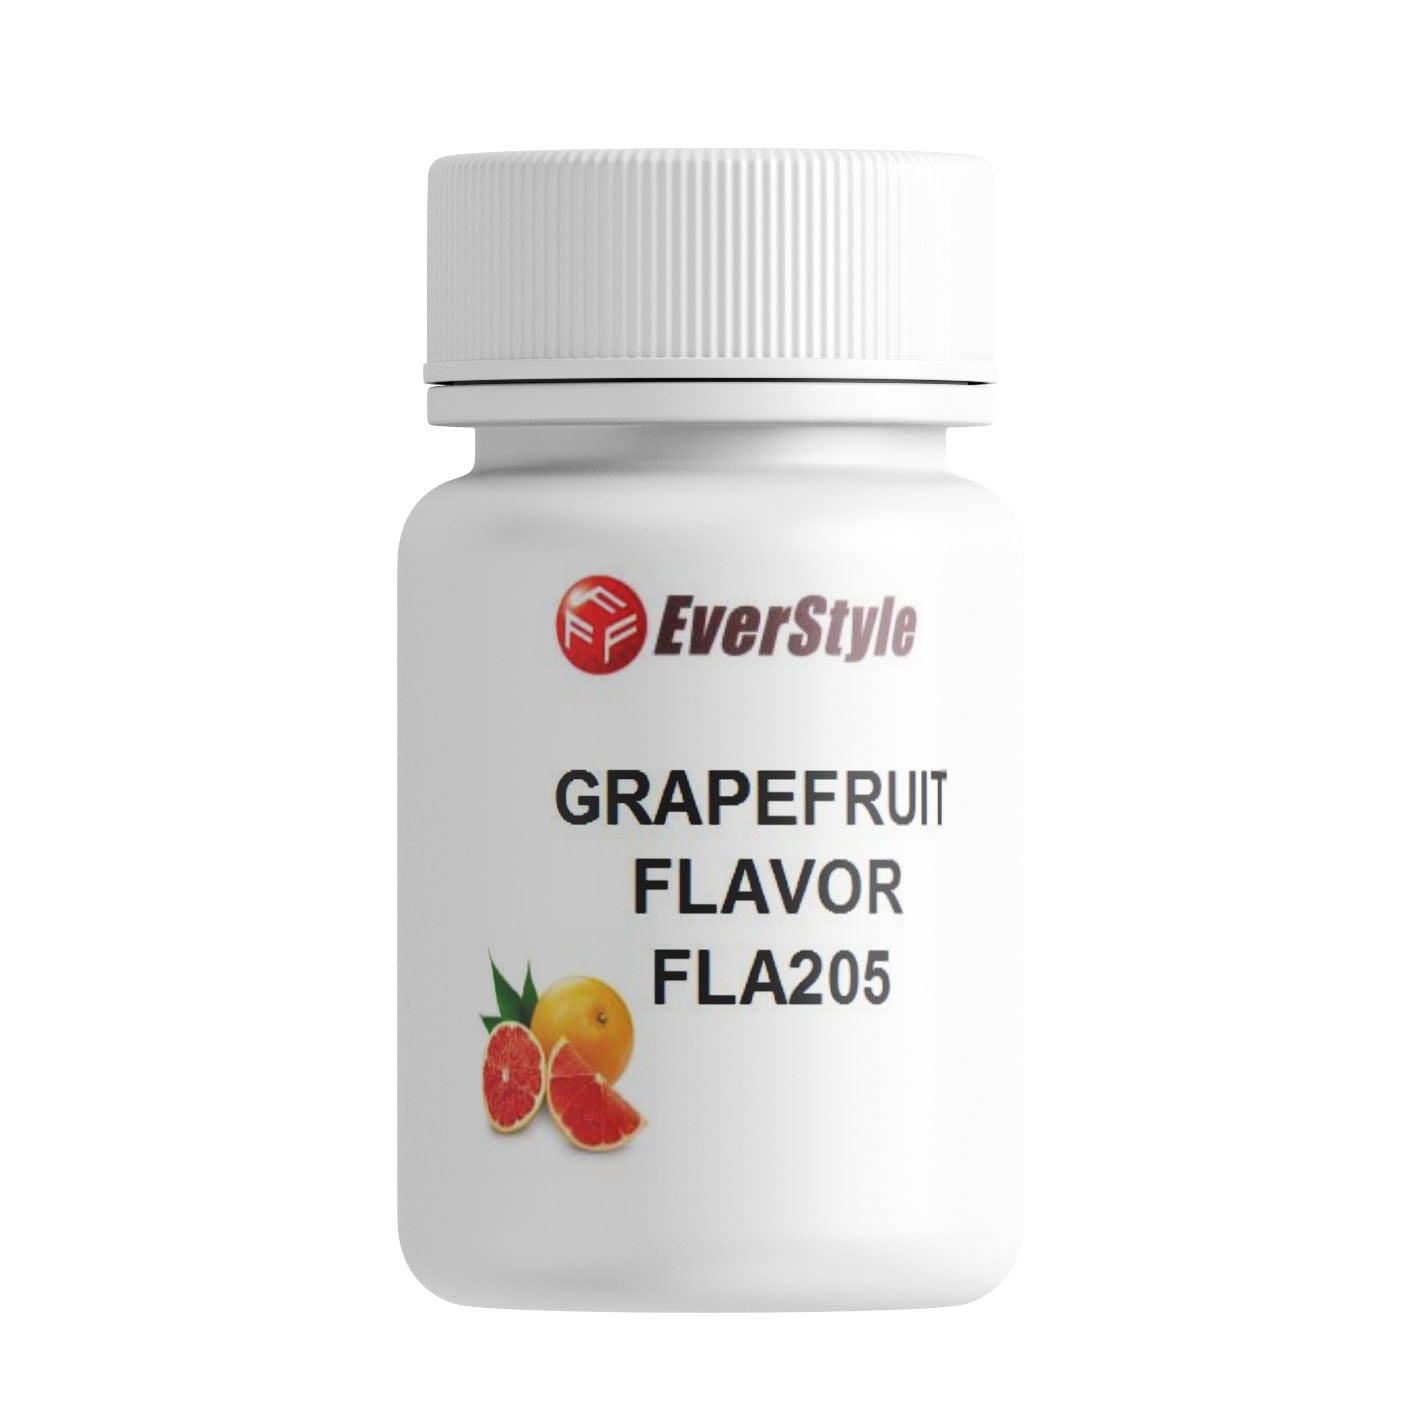 Everstyle Grapefruit Flavor 30g (FLA205)